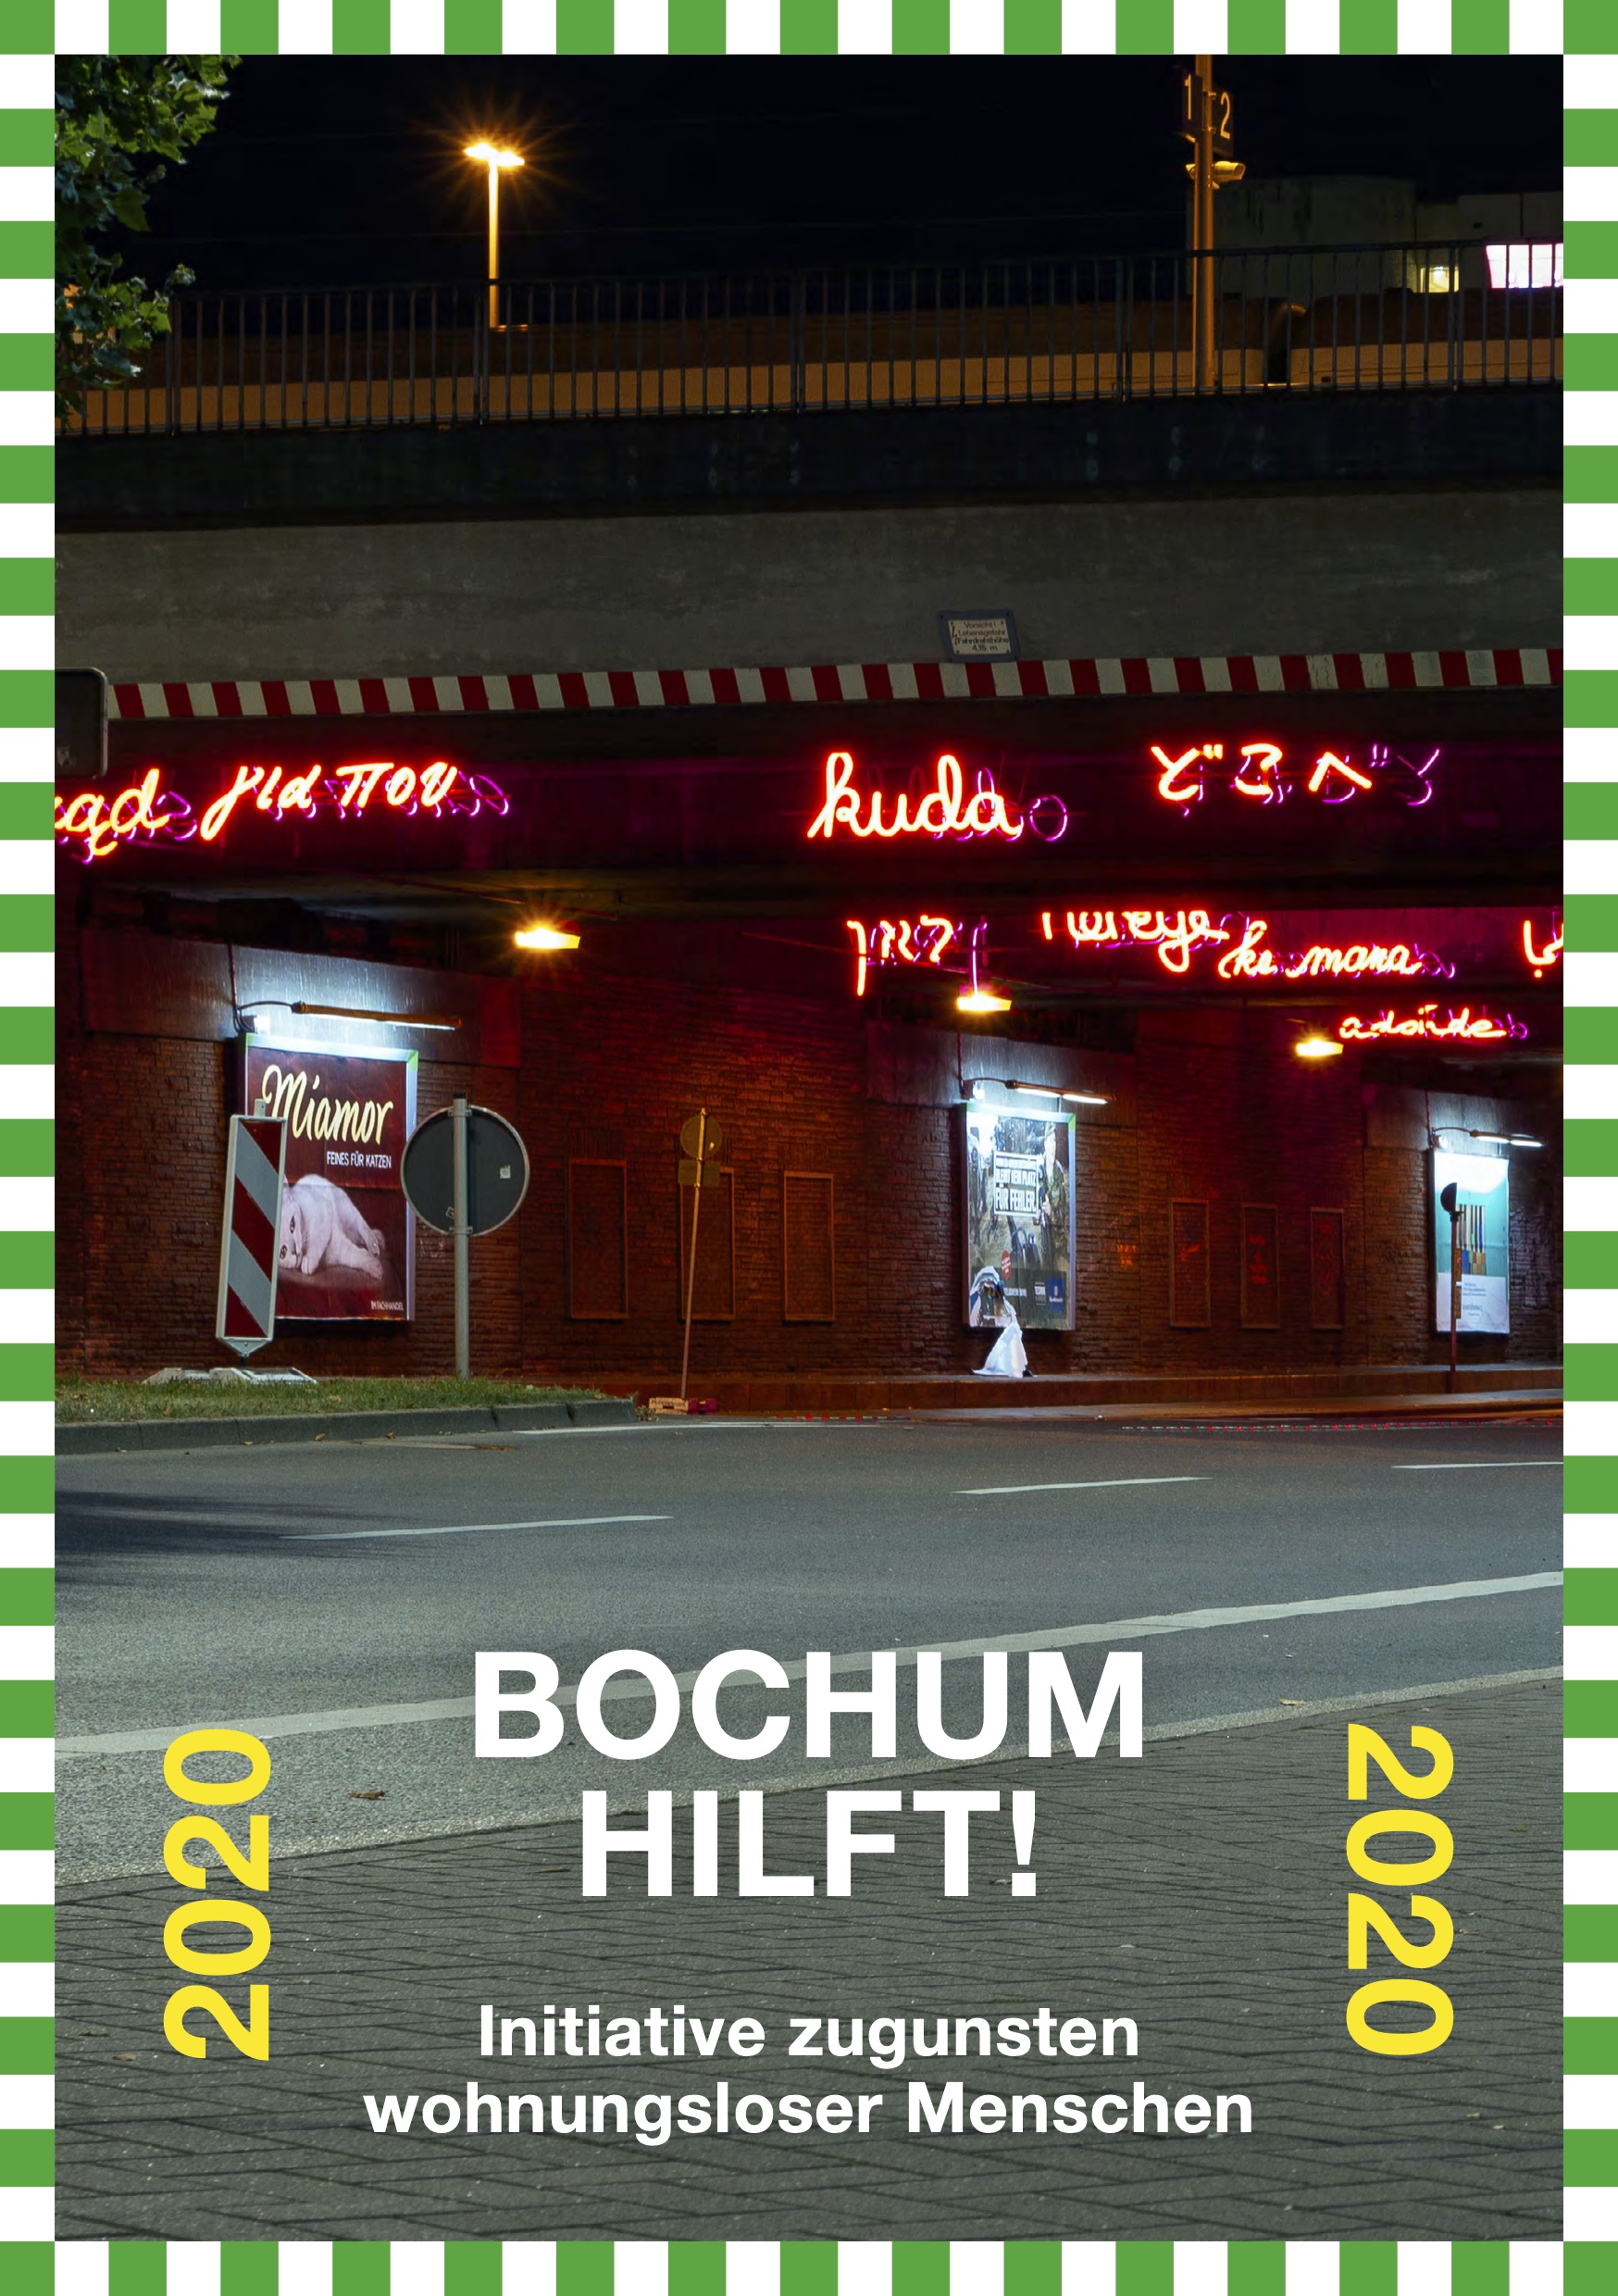 Bochum hilft (2020)! Initiative zugunsten wohnungsloser Menschen